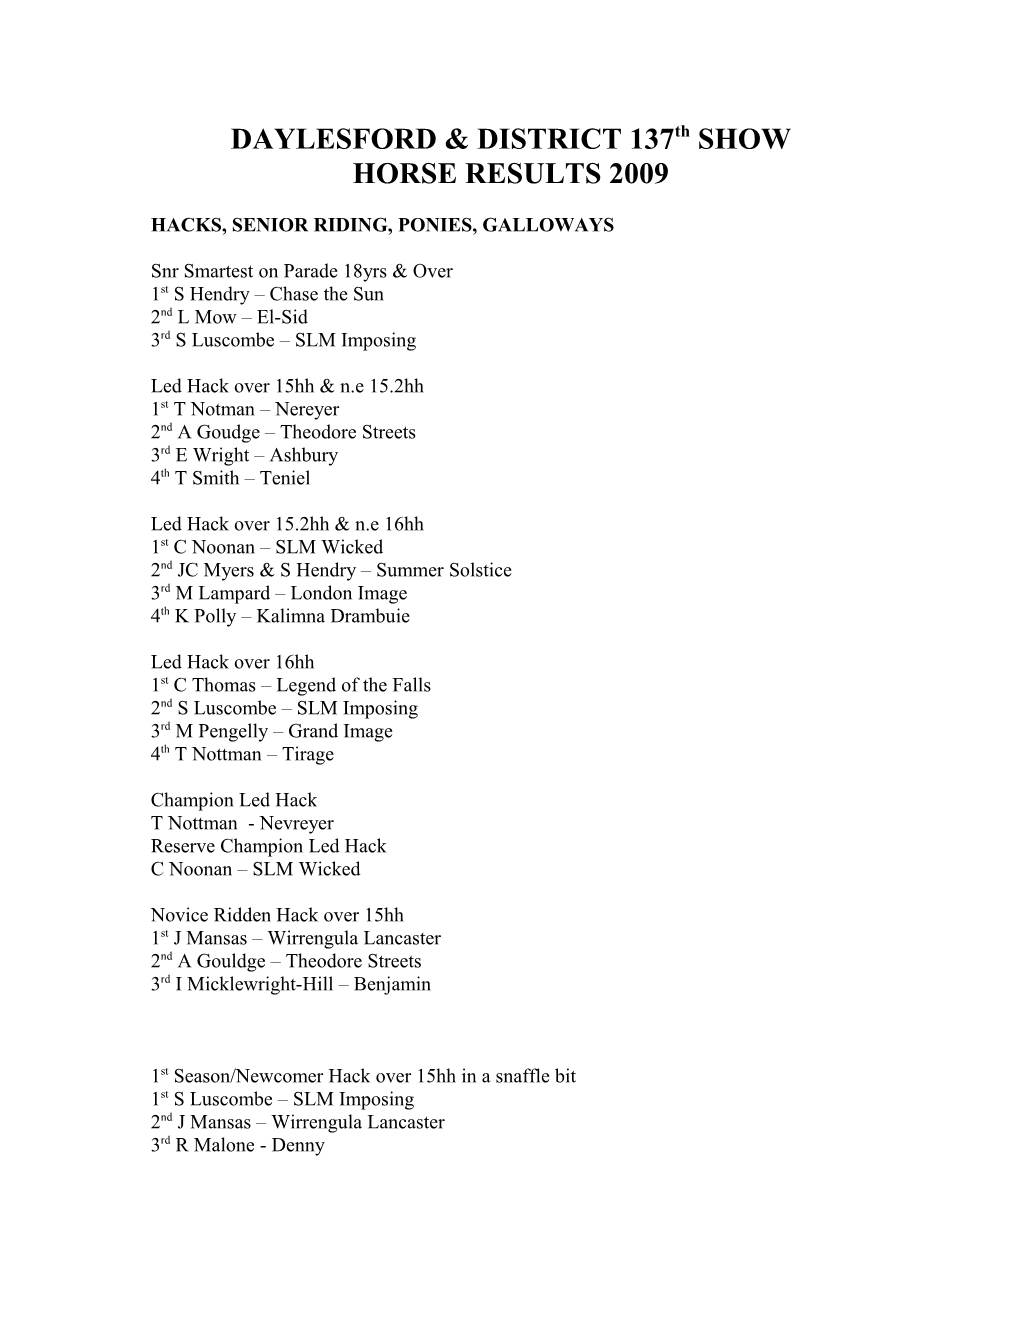 Daylesford & District Show Results Horse Program 2006